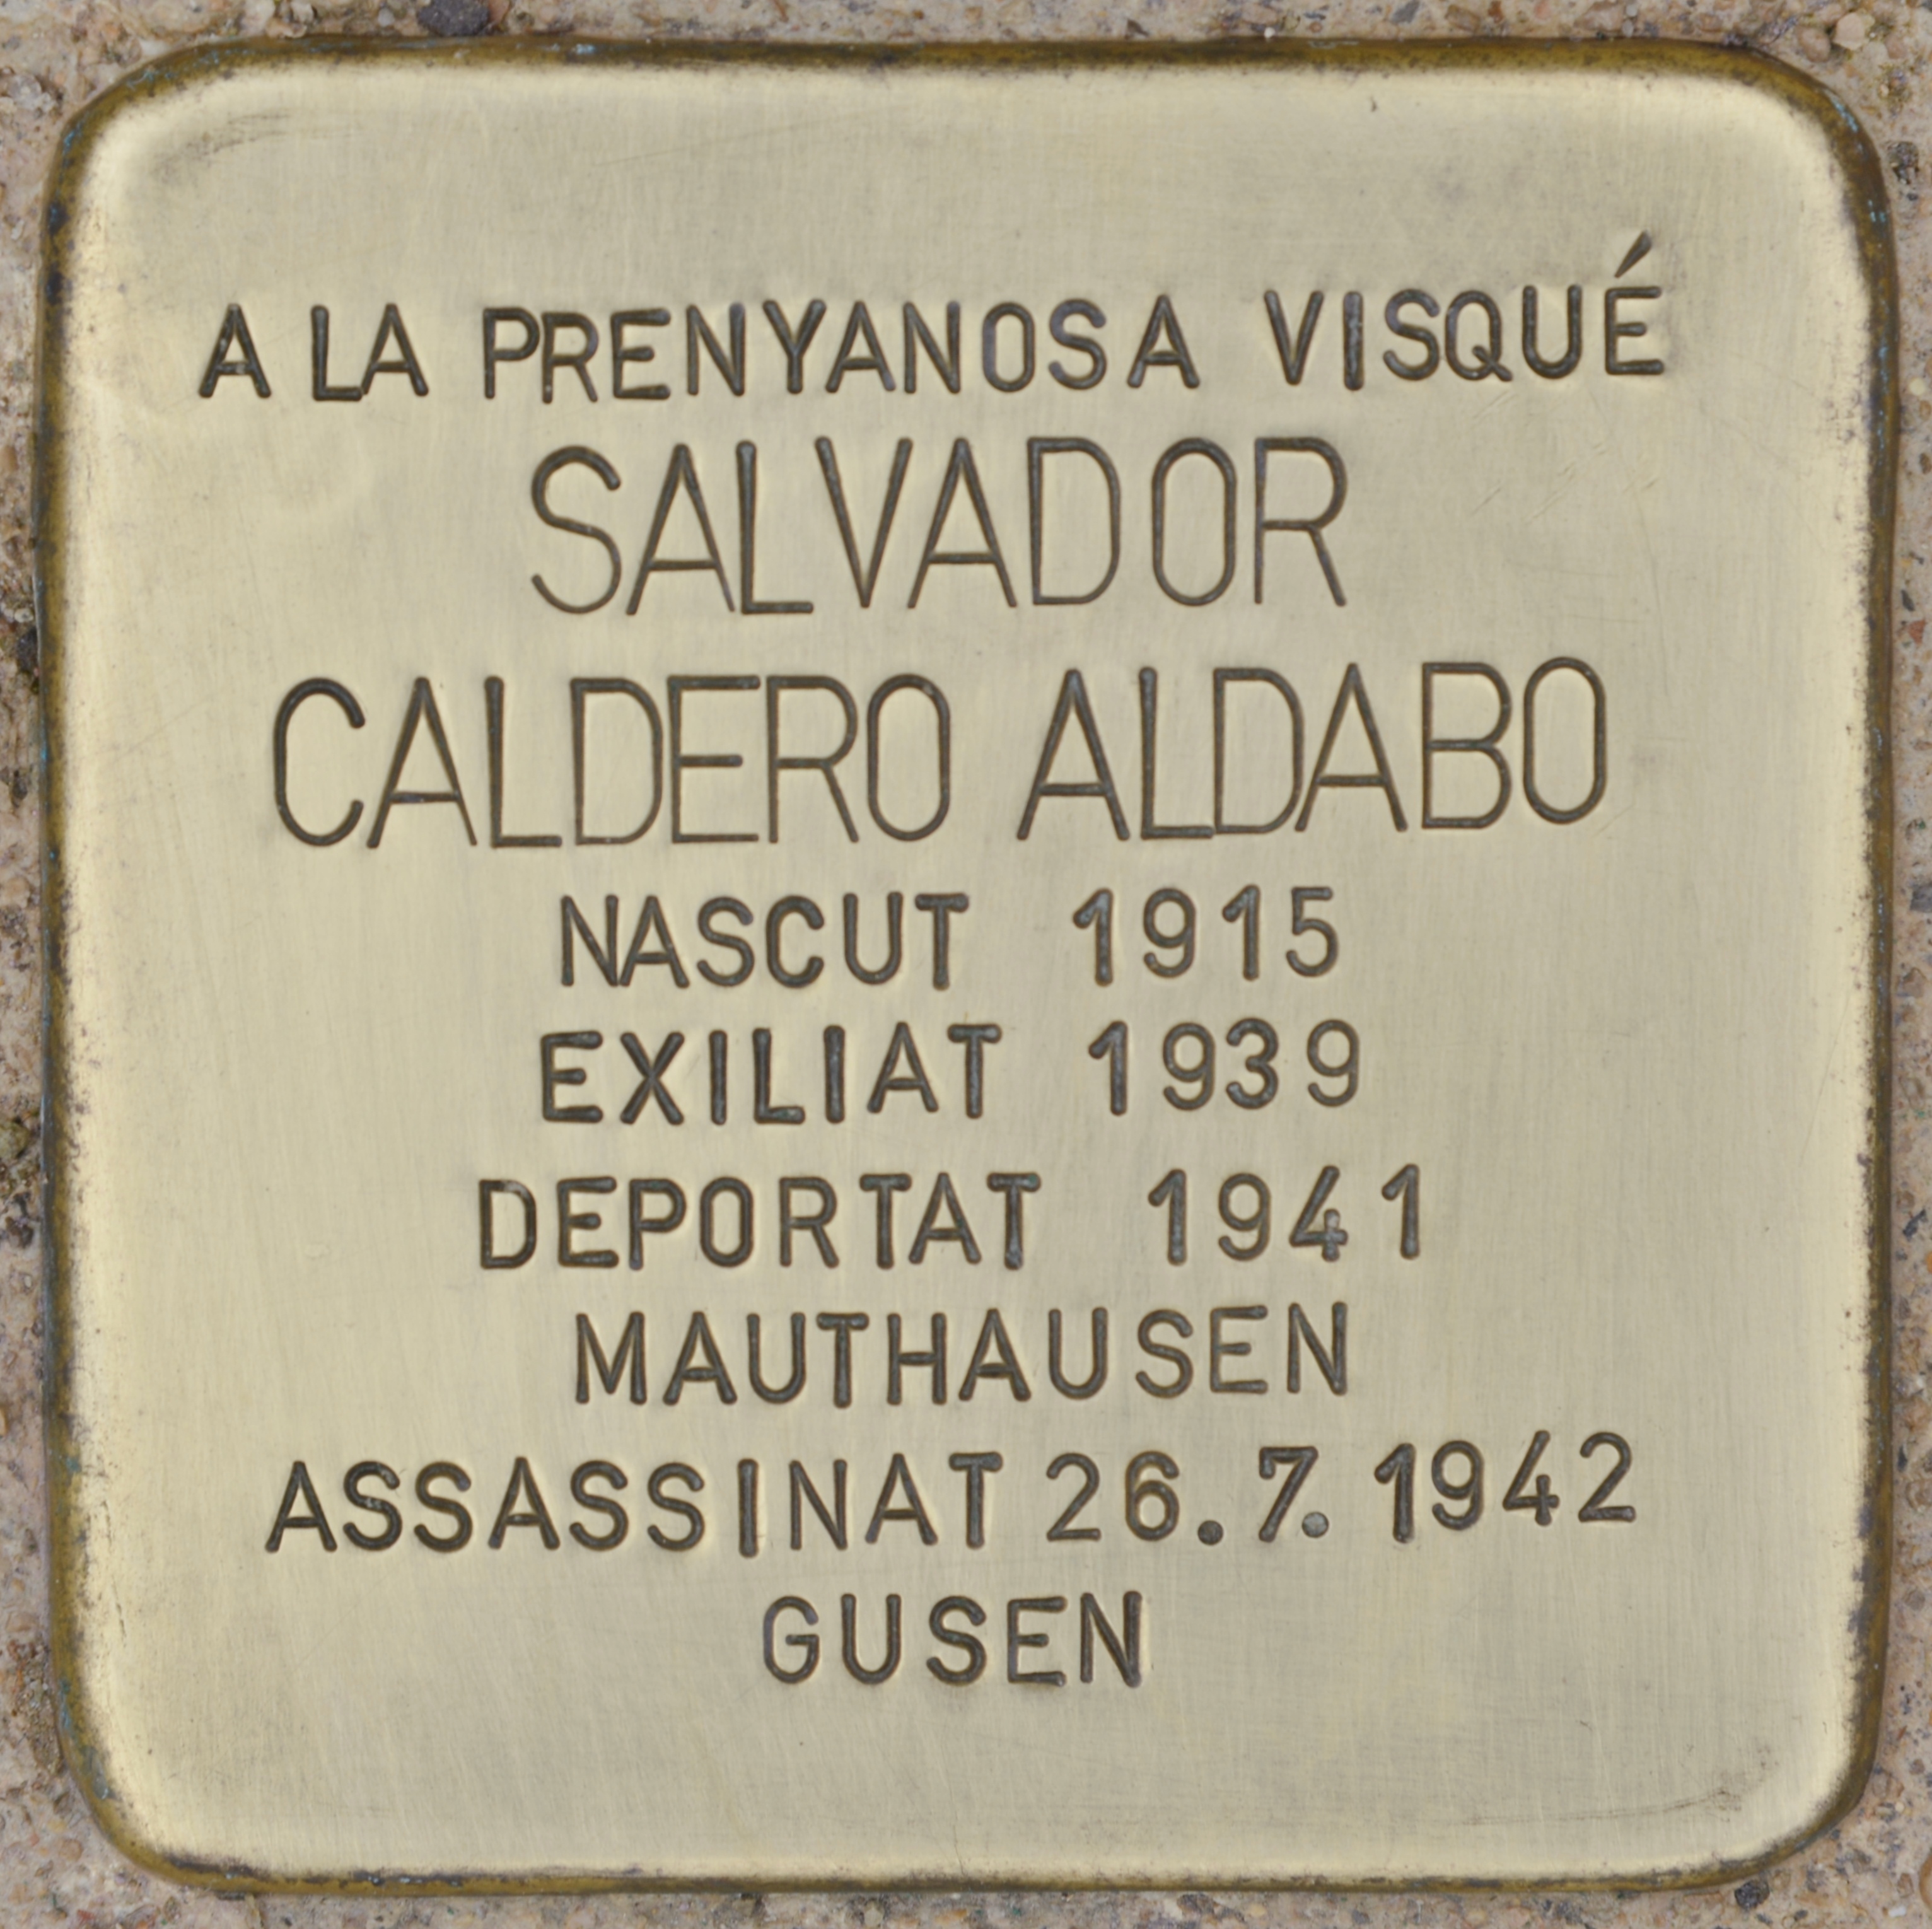 Caldero - Wikipedia, la enciclopedia libre